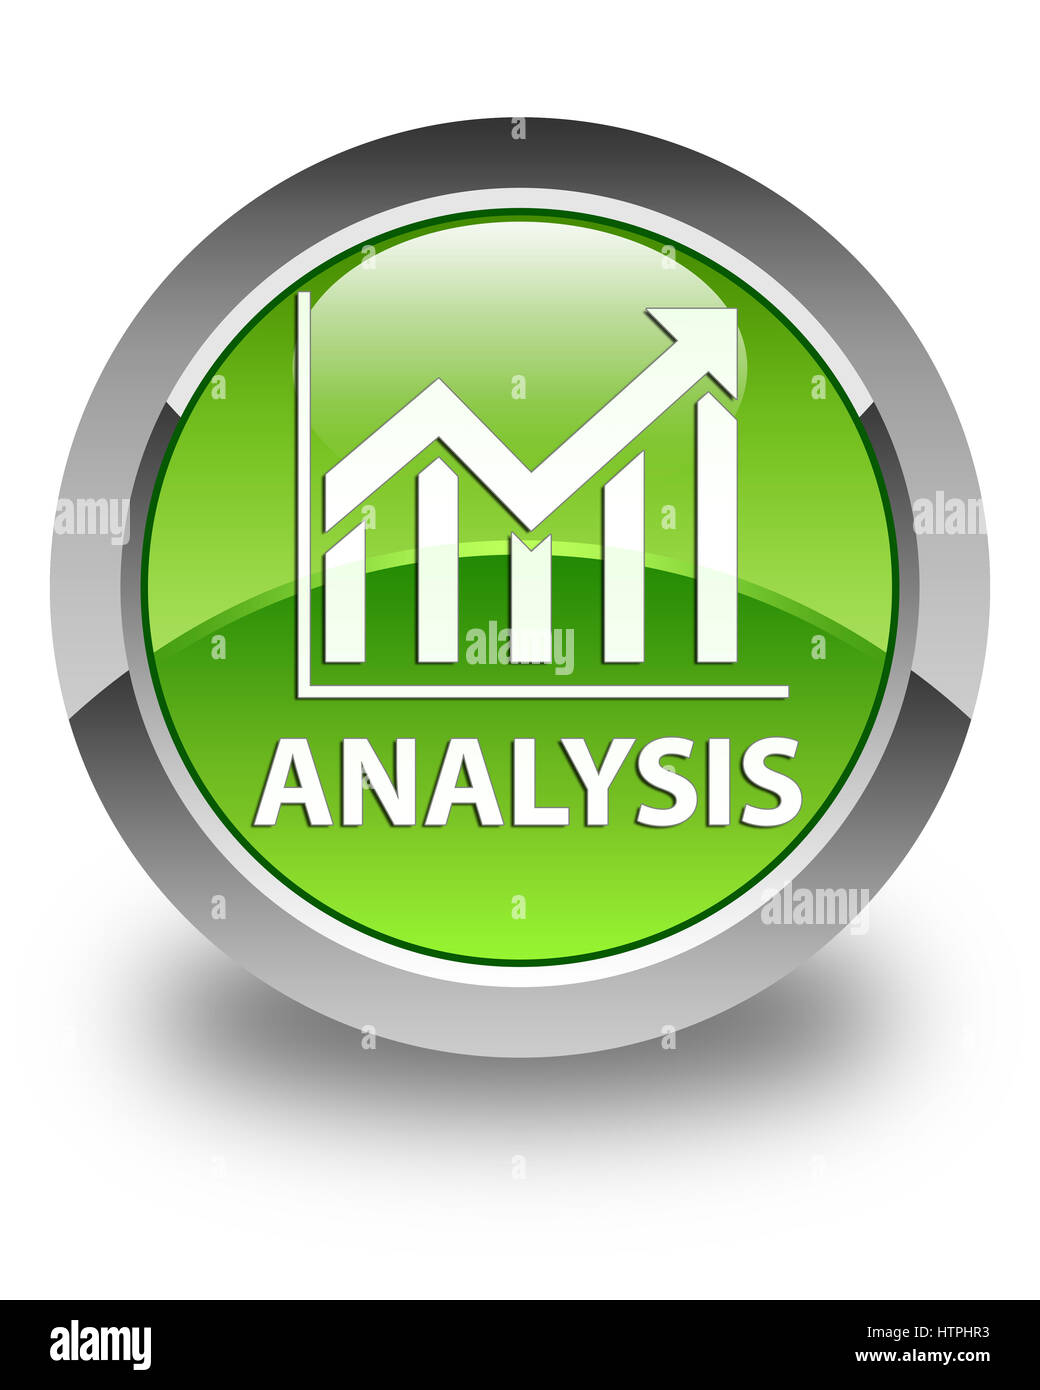 (Icône) Analyse statistique isolé sur le bouton rond vert brillant abstract illustration Banque D'Images